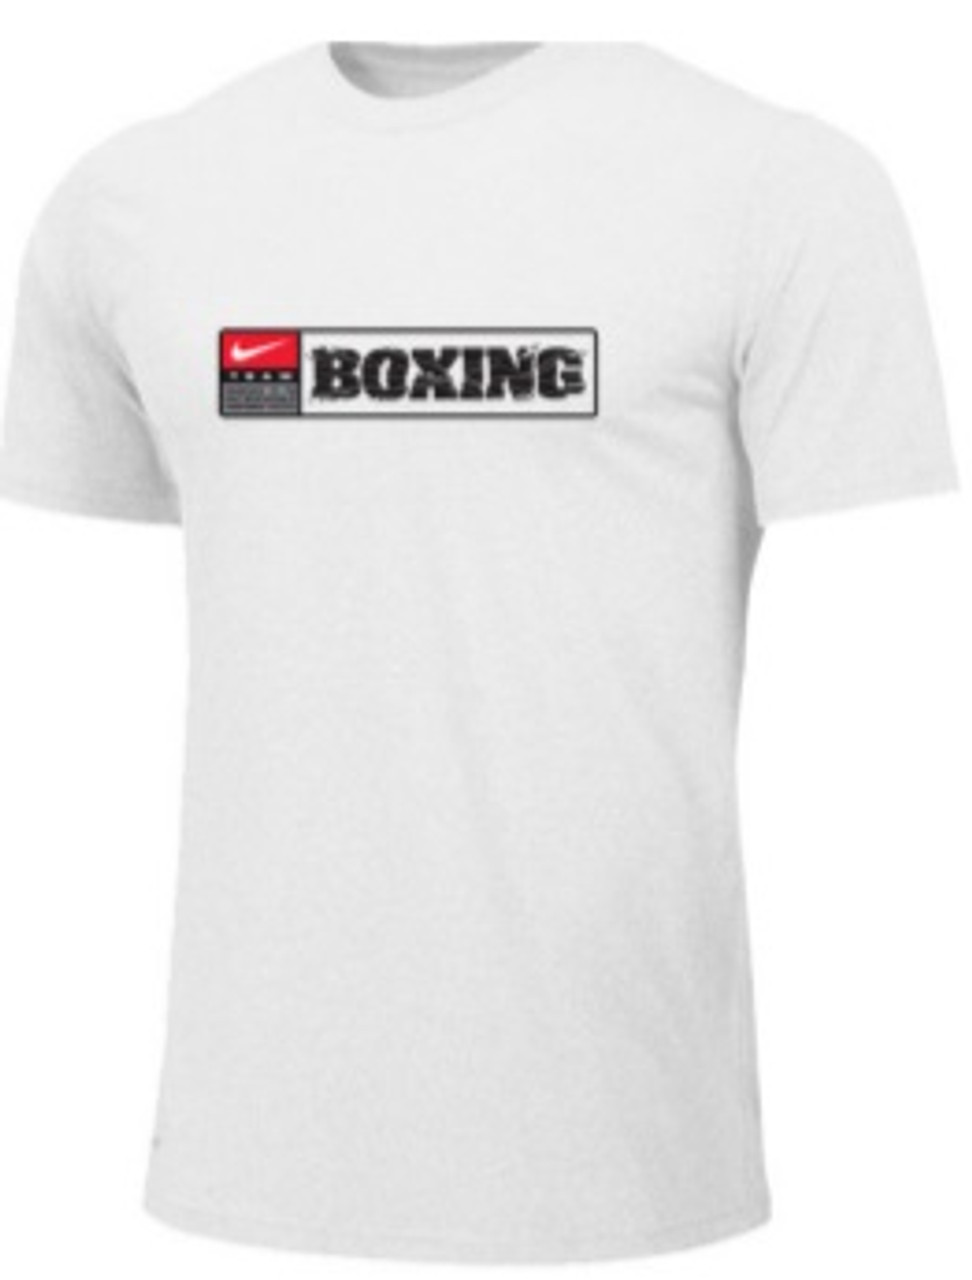 nike boxing shirt